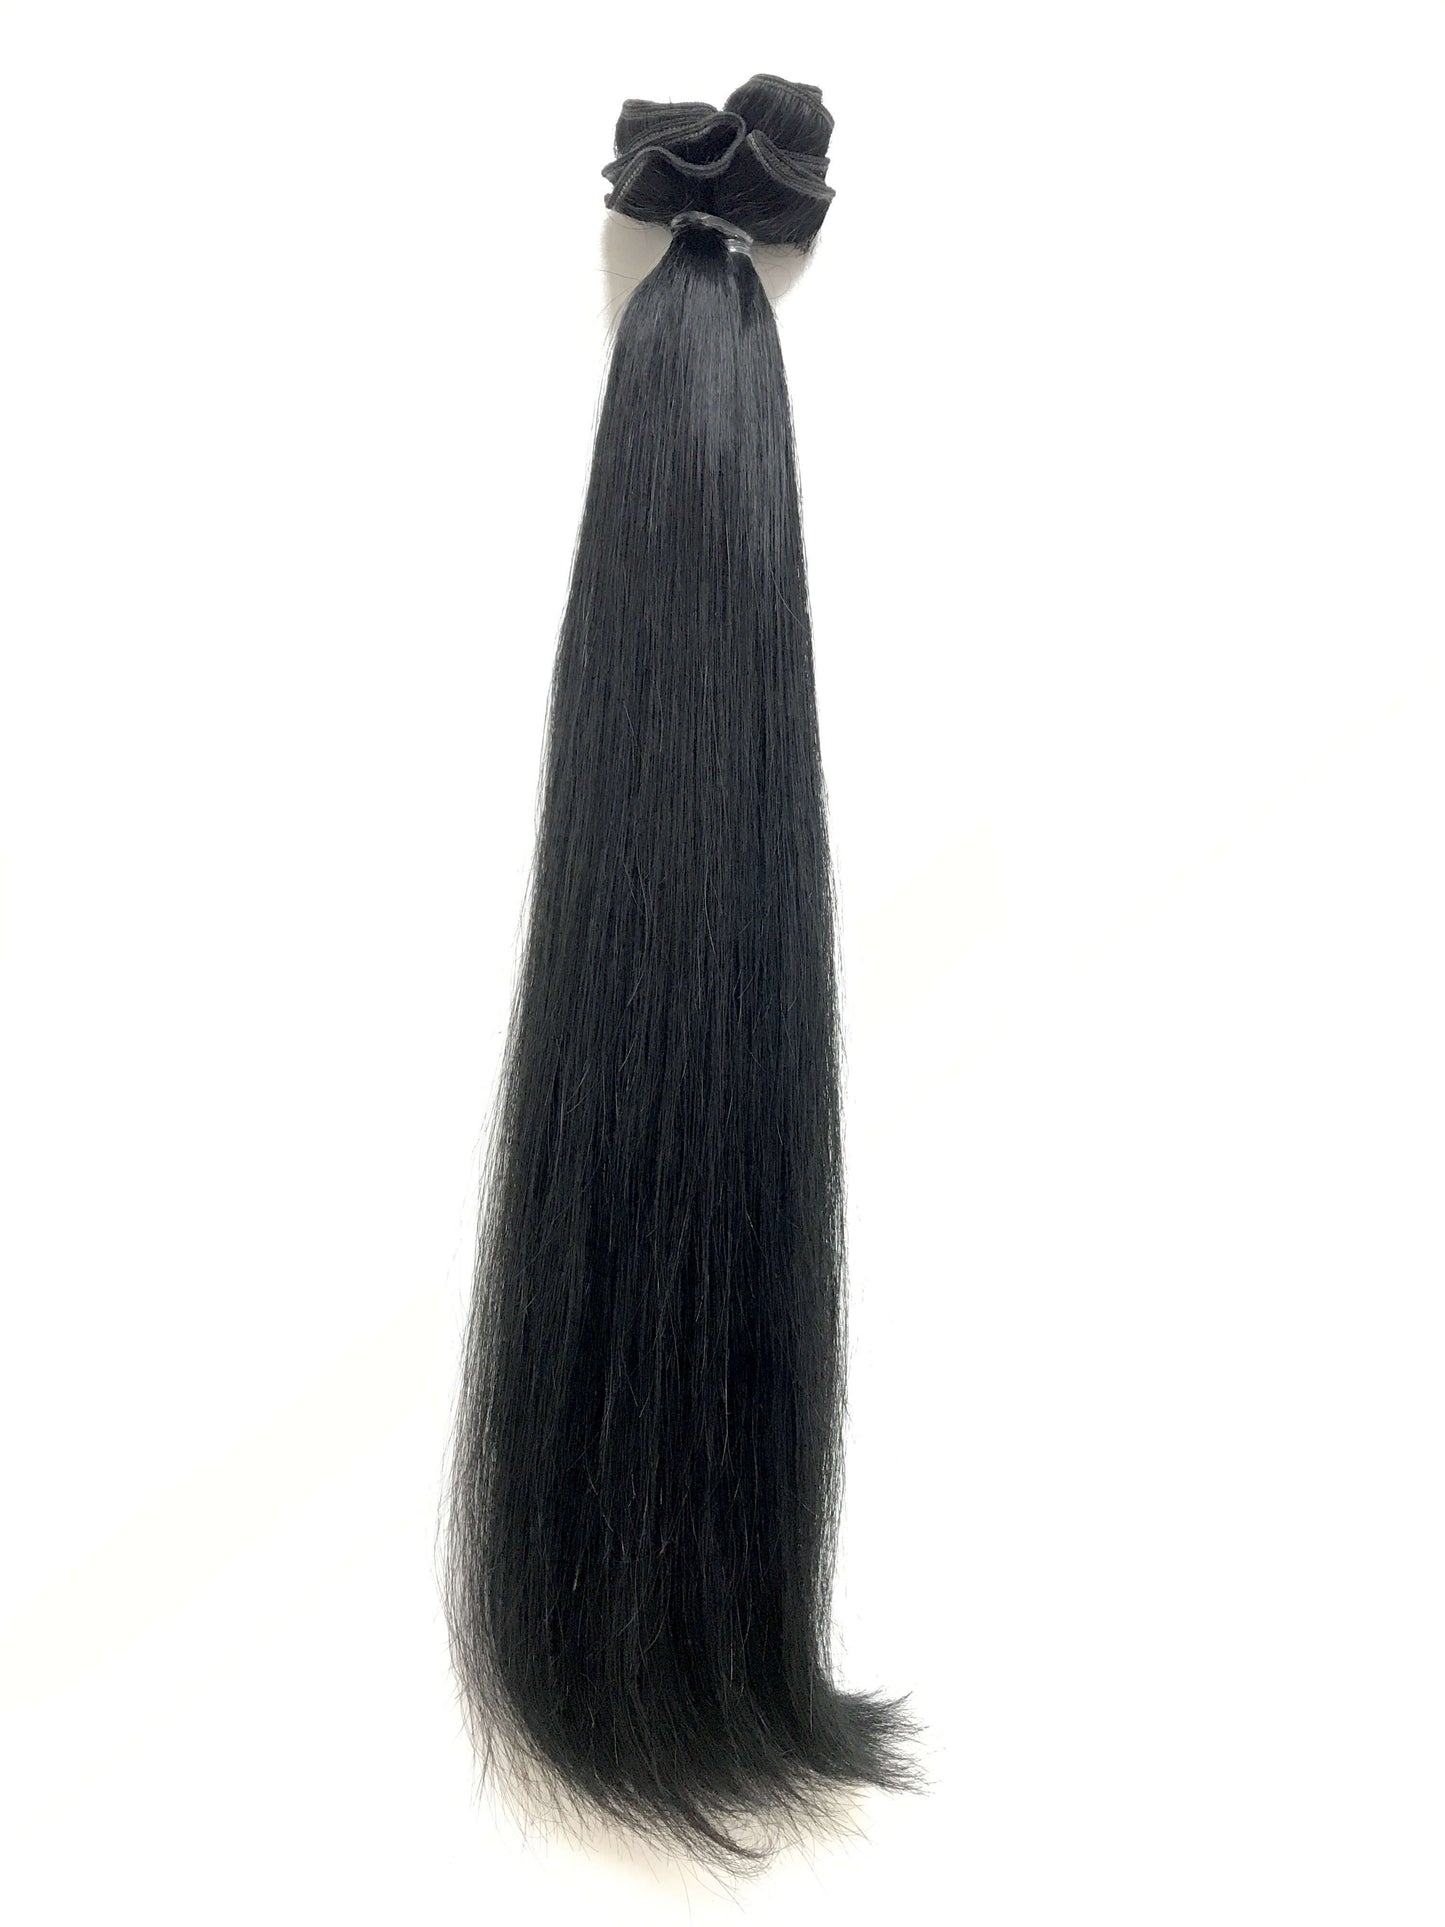 Brazilian Virgin Remy Human Hair - Inslag, 20'', Rak, Färg Svart, 100 g, Snabbleverans